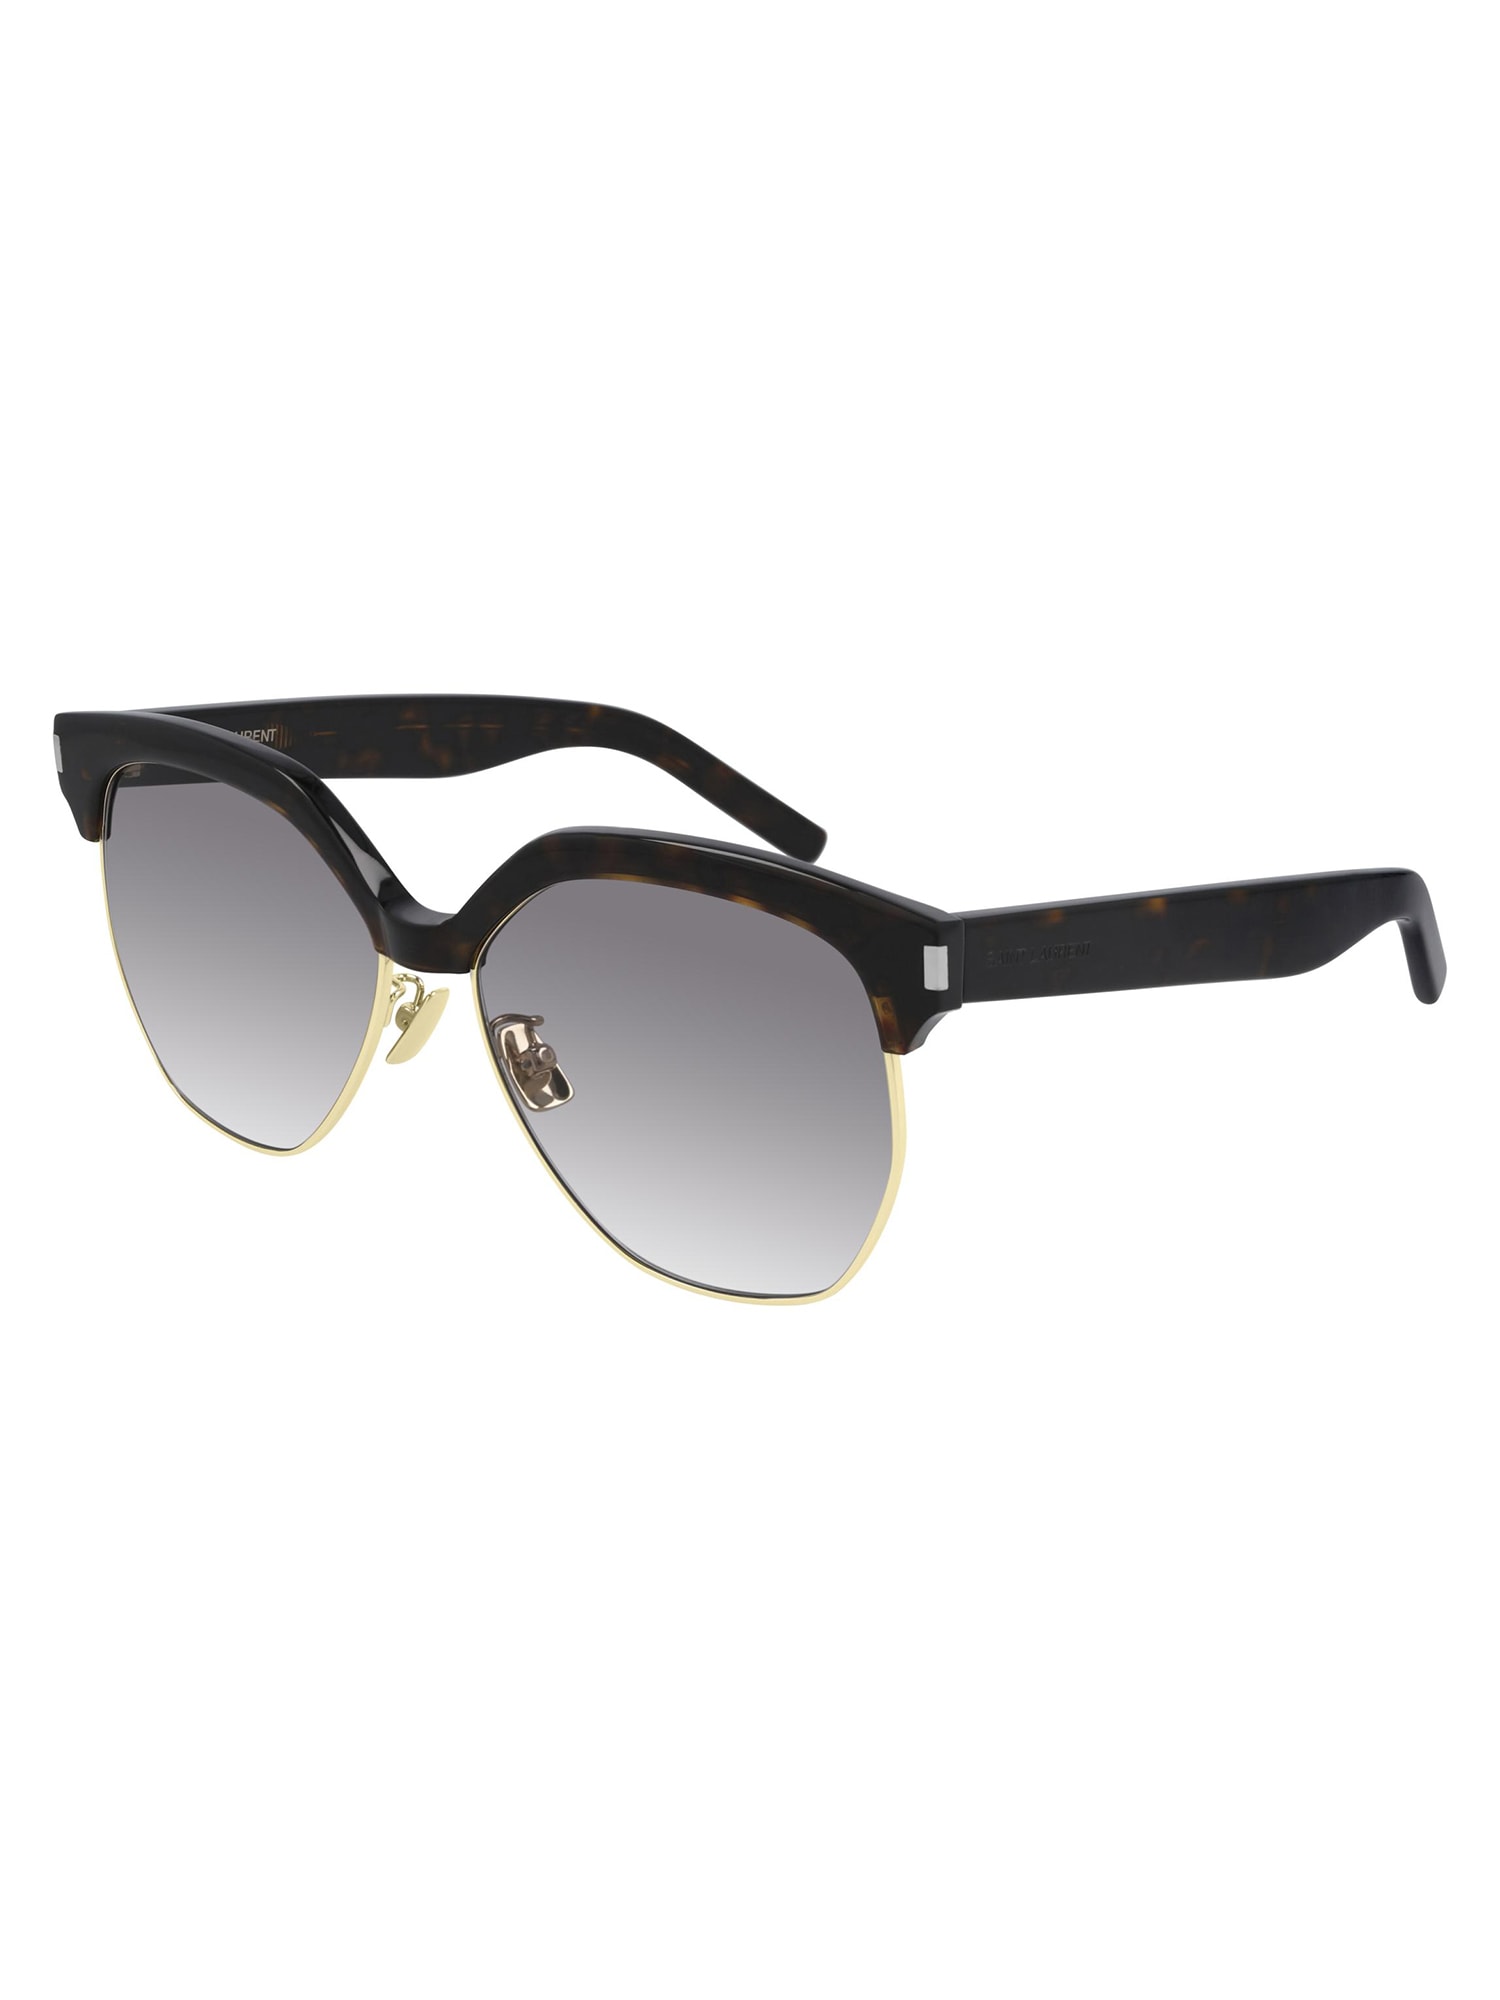 Saint Laurent SL 408 Sunglasses